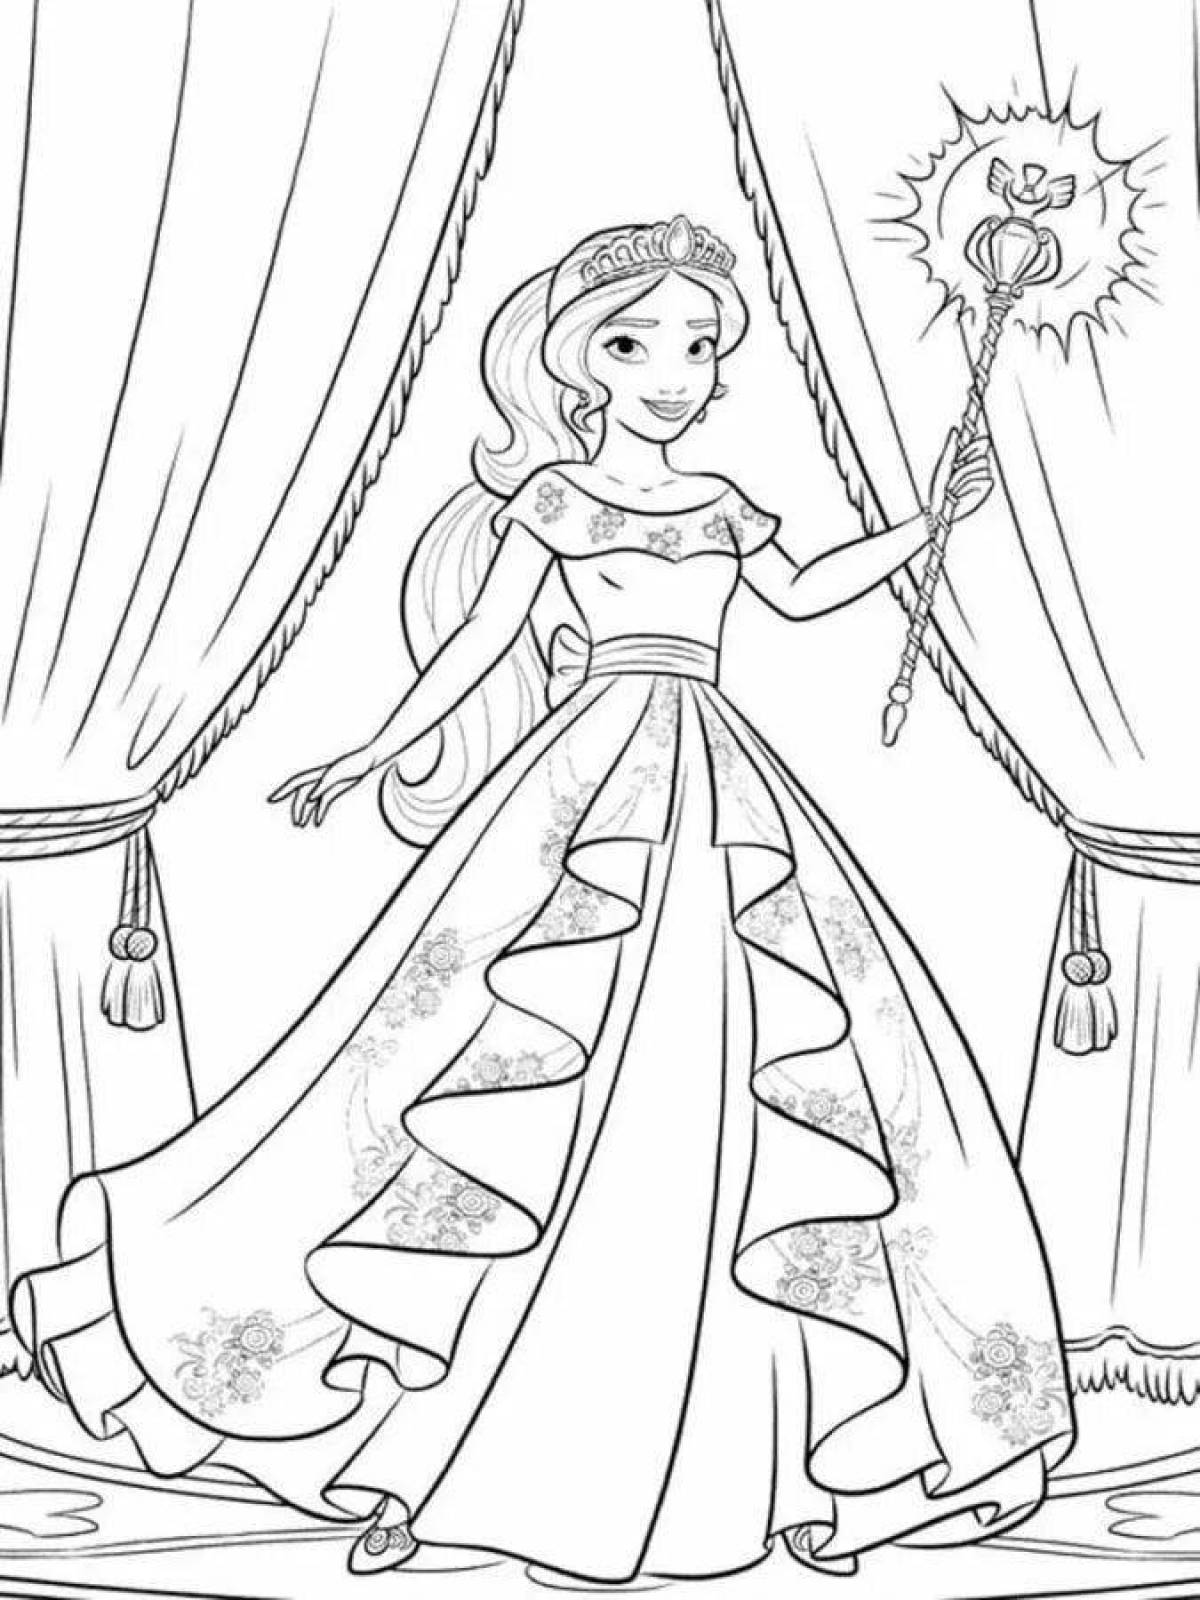 Princess Elena's gorgeous coloring book